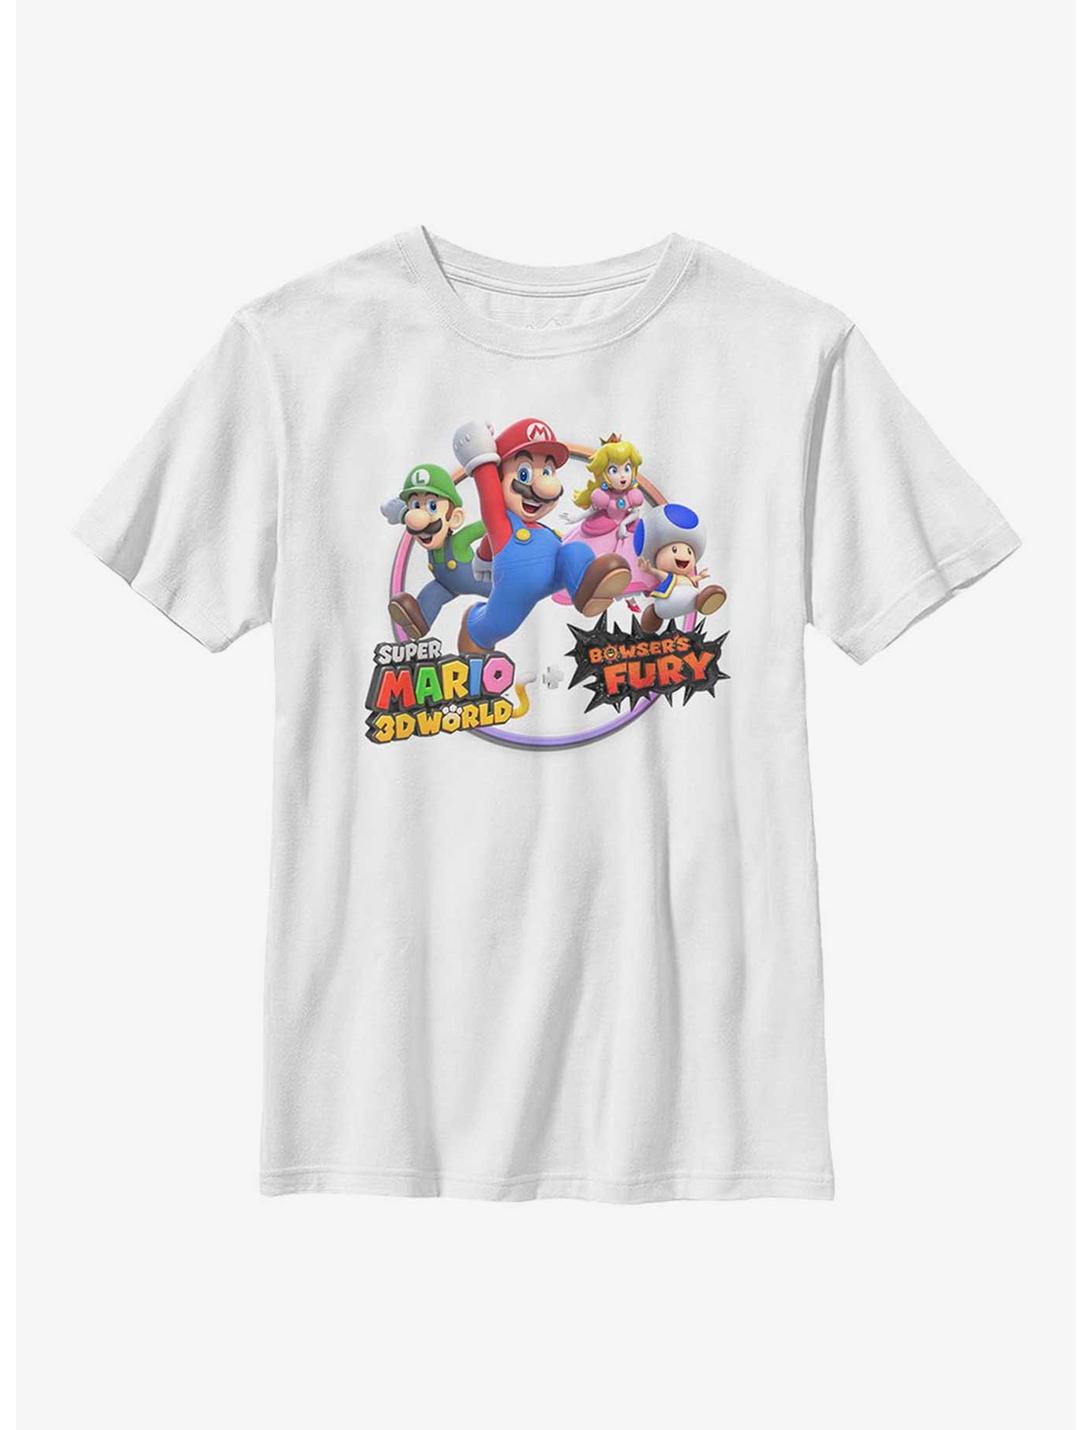 Nintendo Super Mario 3D World Bowser's Fury Group Youth T-Shirt, WHITE, hi-res